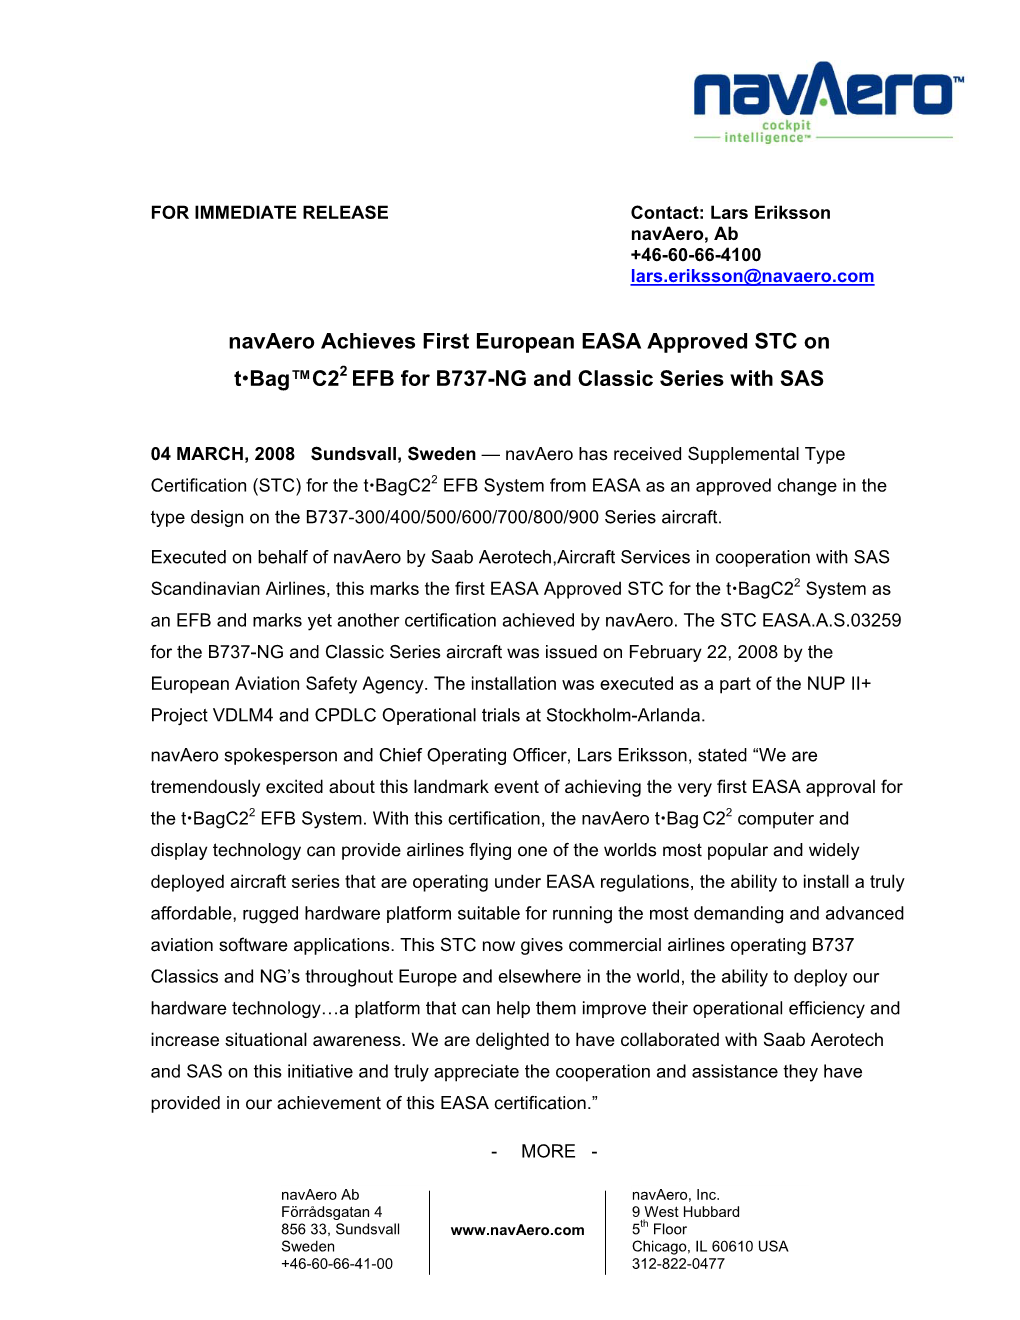 Navaero Achieves First European EASA Approved STC on T Bag™C2